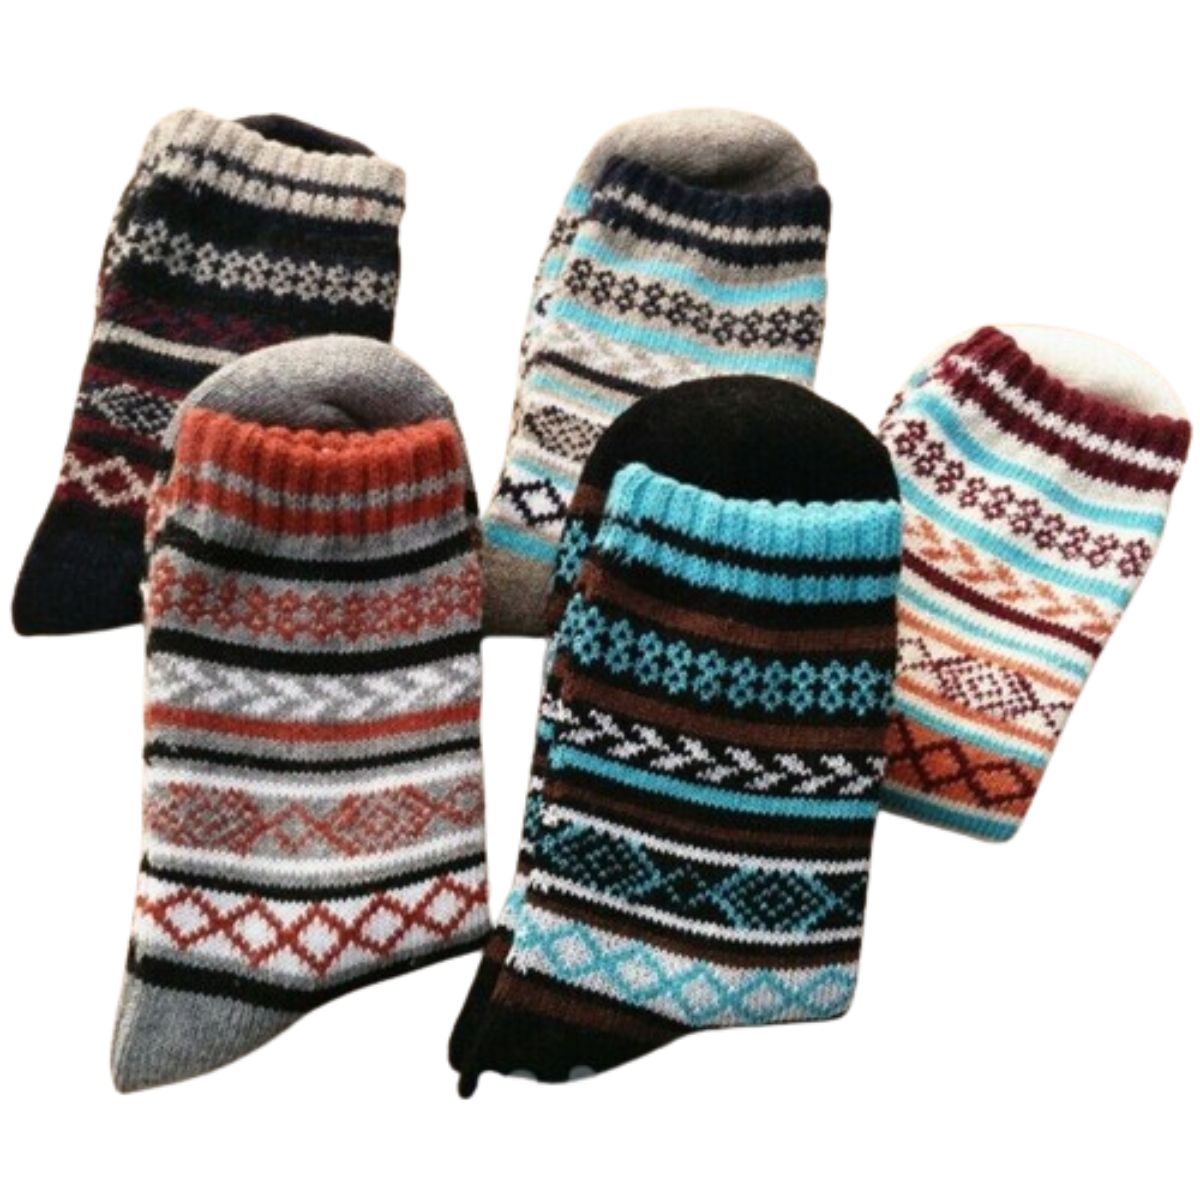 Comfortable Wool Socks 5 Pairs